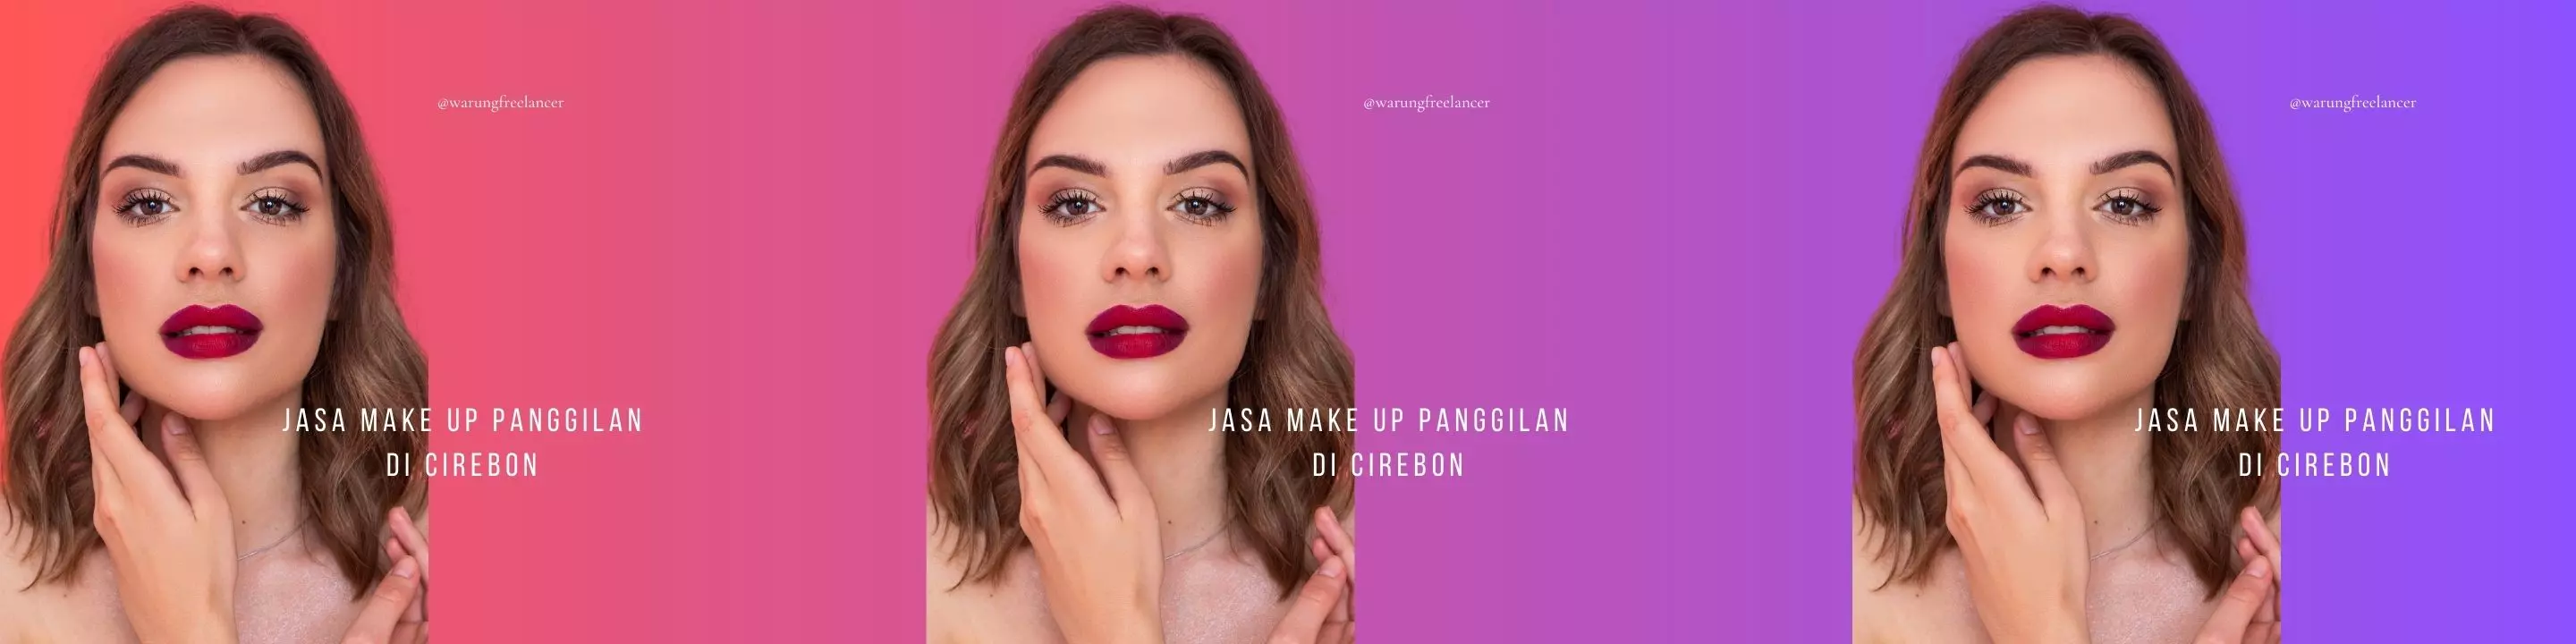 Jasa Make Up Panggilan di Cirebon